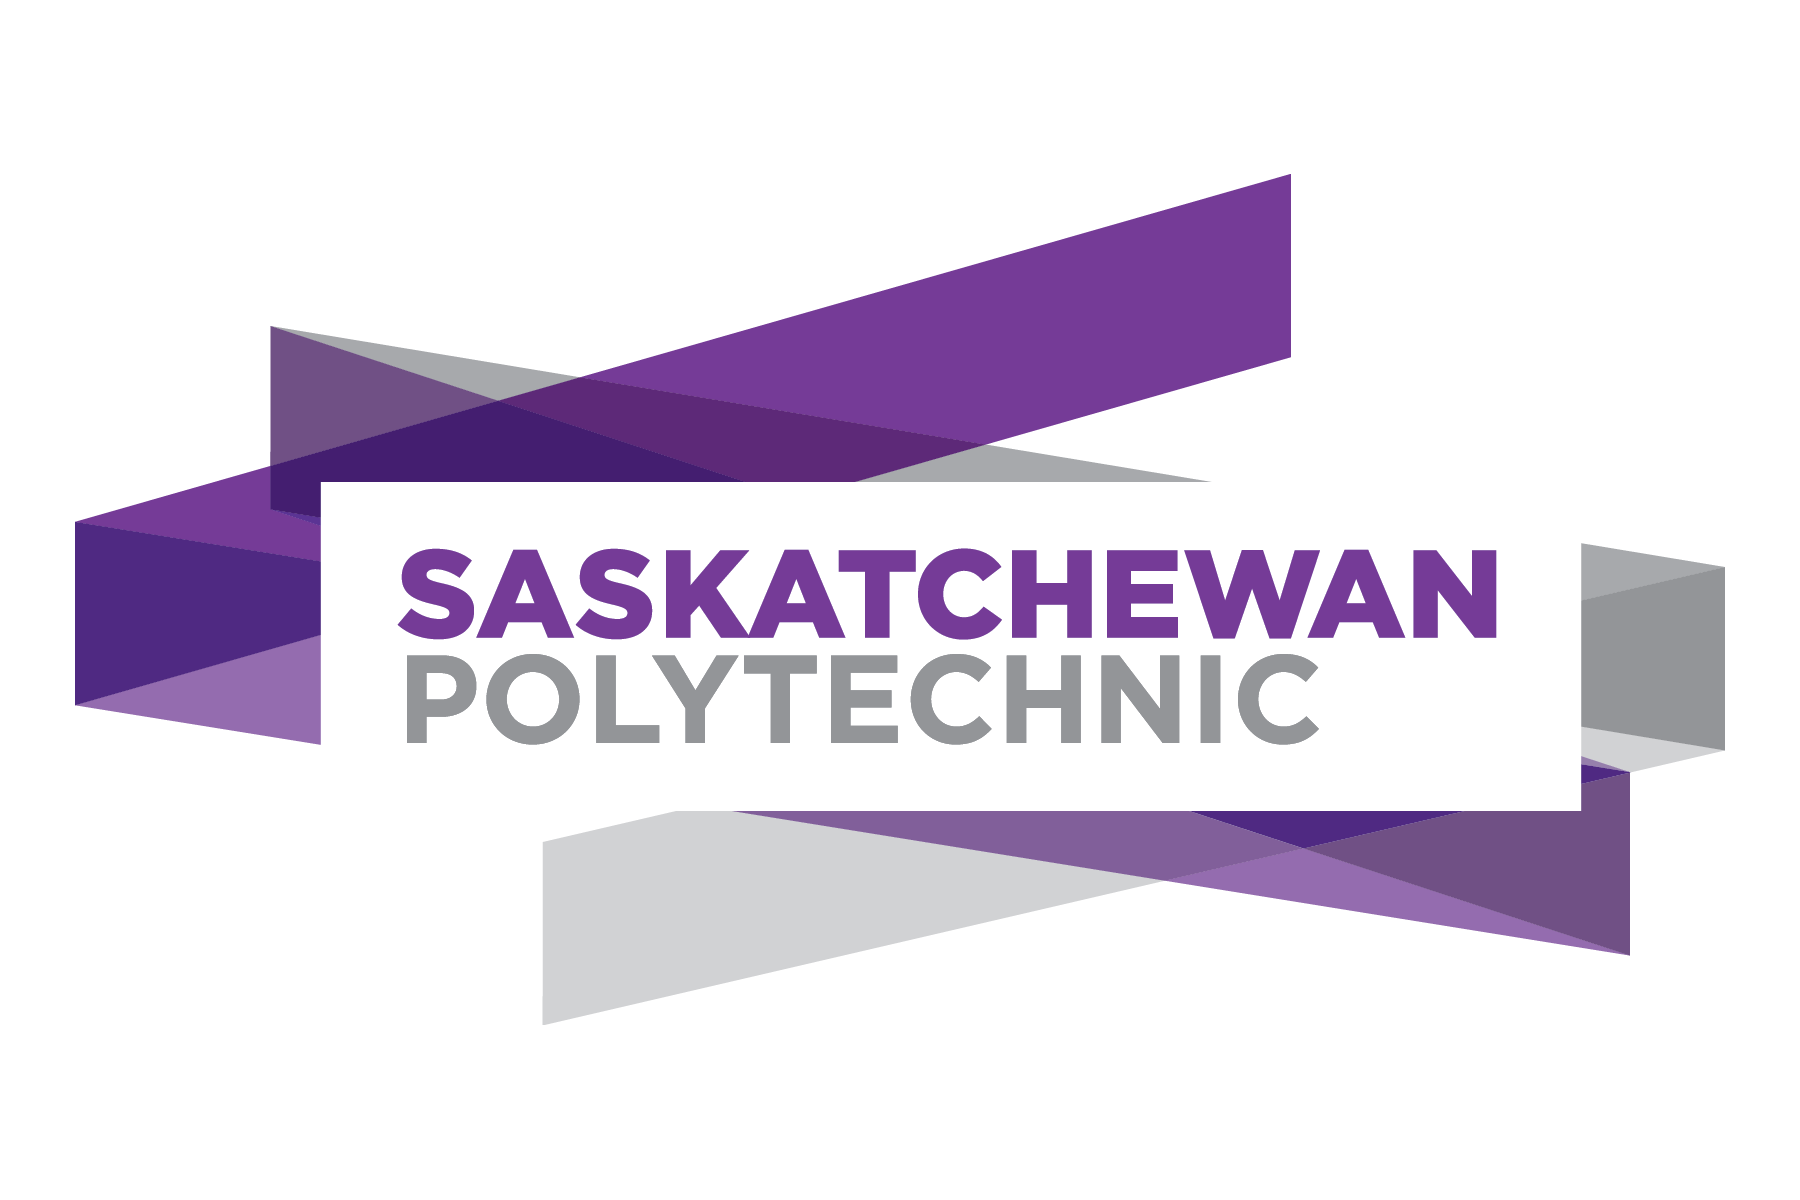 Saskatchewan polytechnic